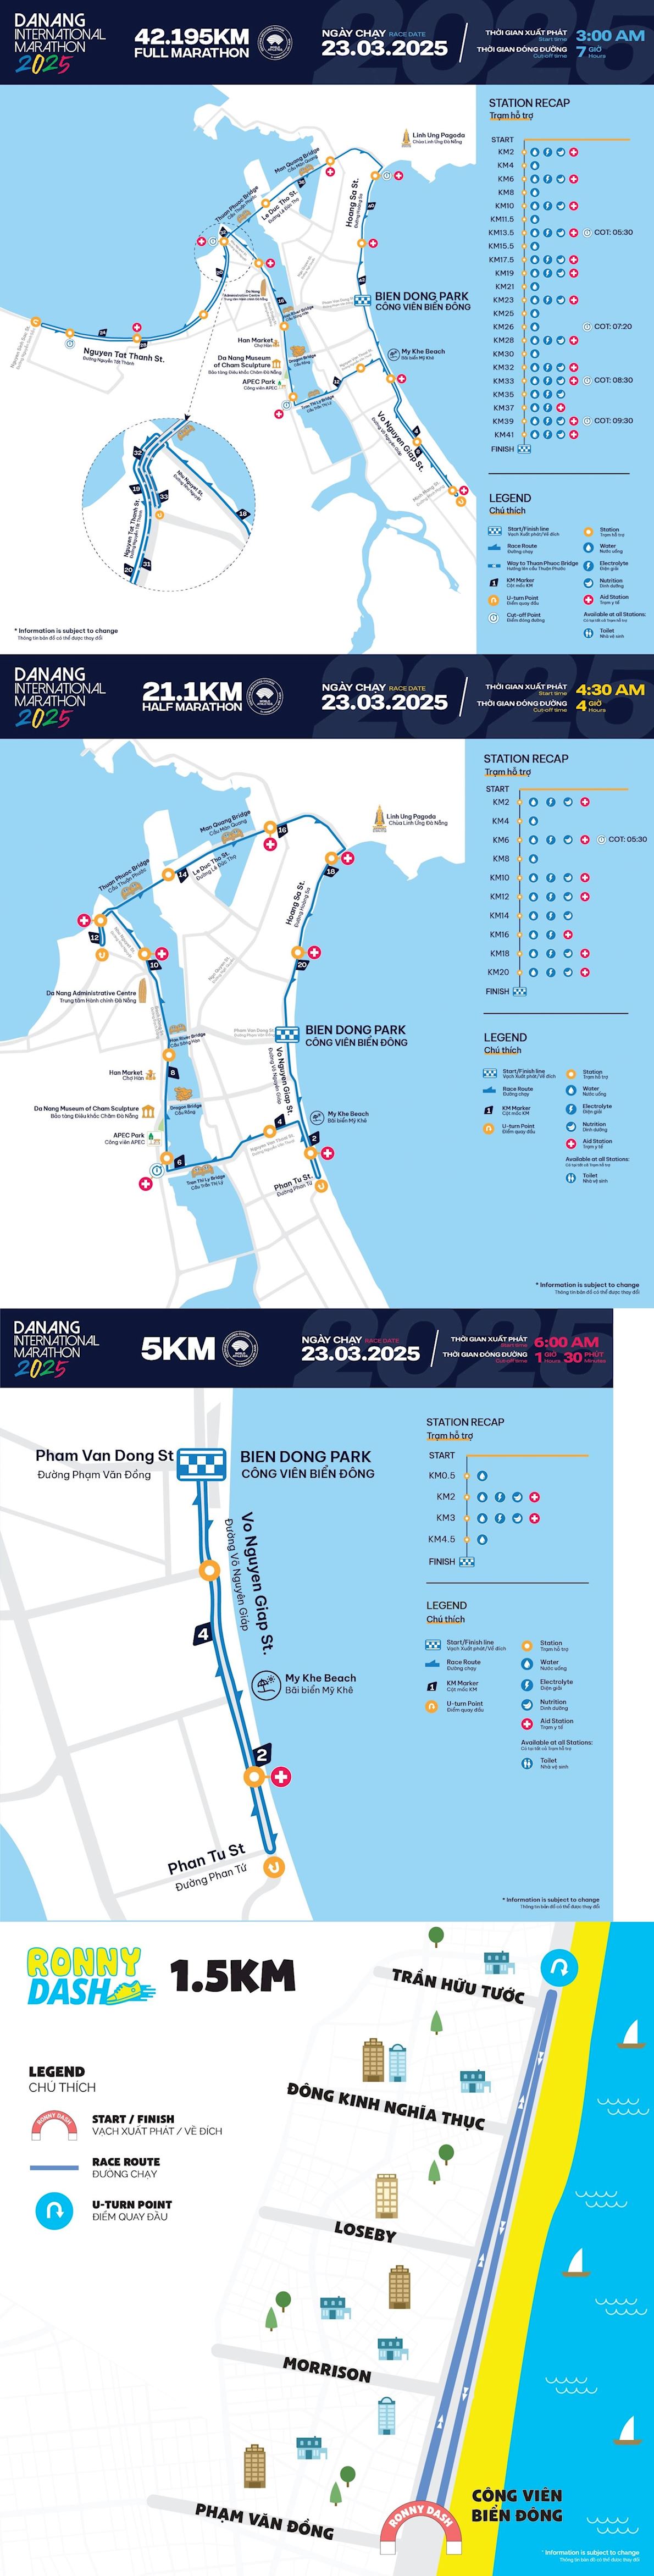 Danang International Marathon 路线图